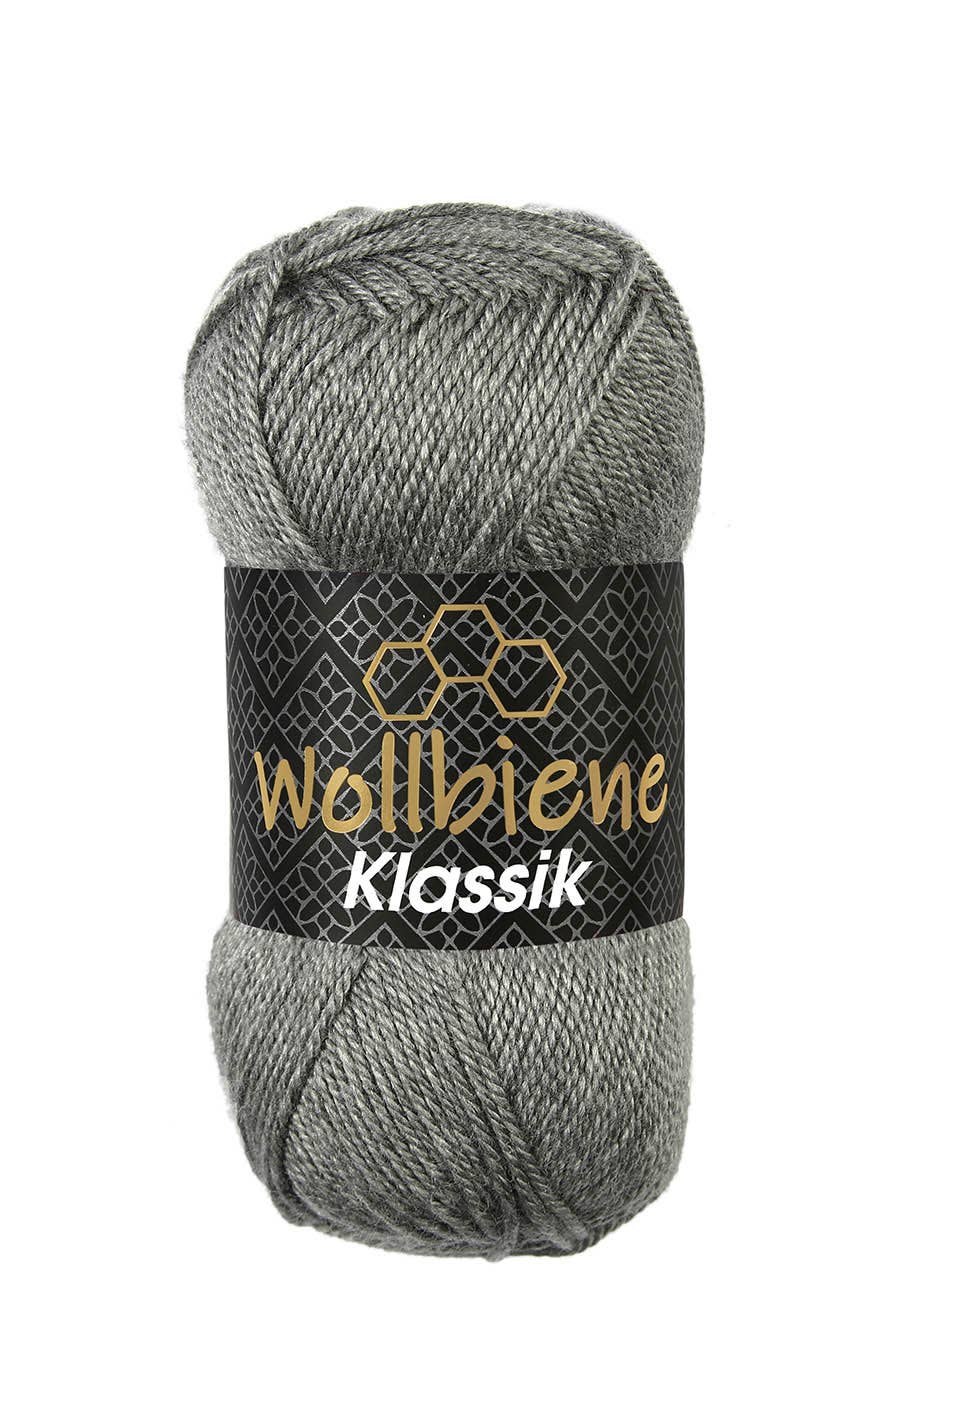 Wollbiene - Wollbiene Klassik Strickwolle Uni Farben Häkelwolle 100g